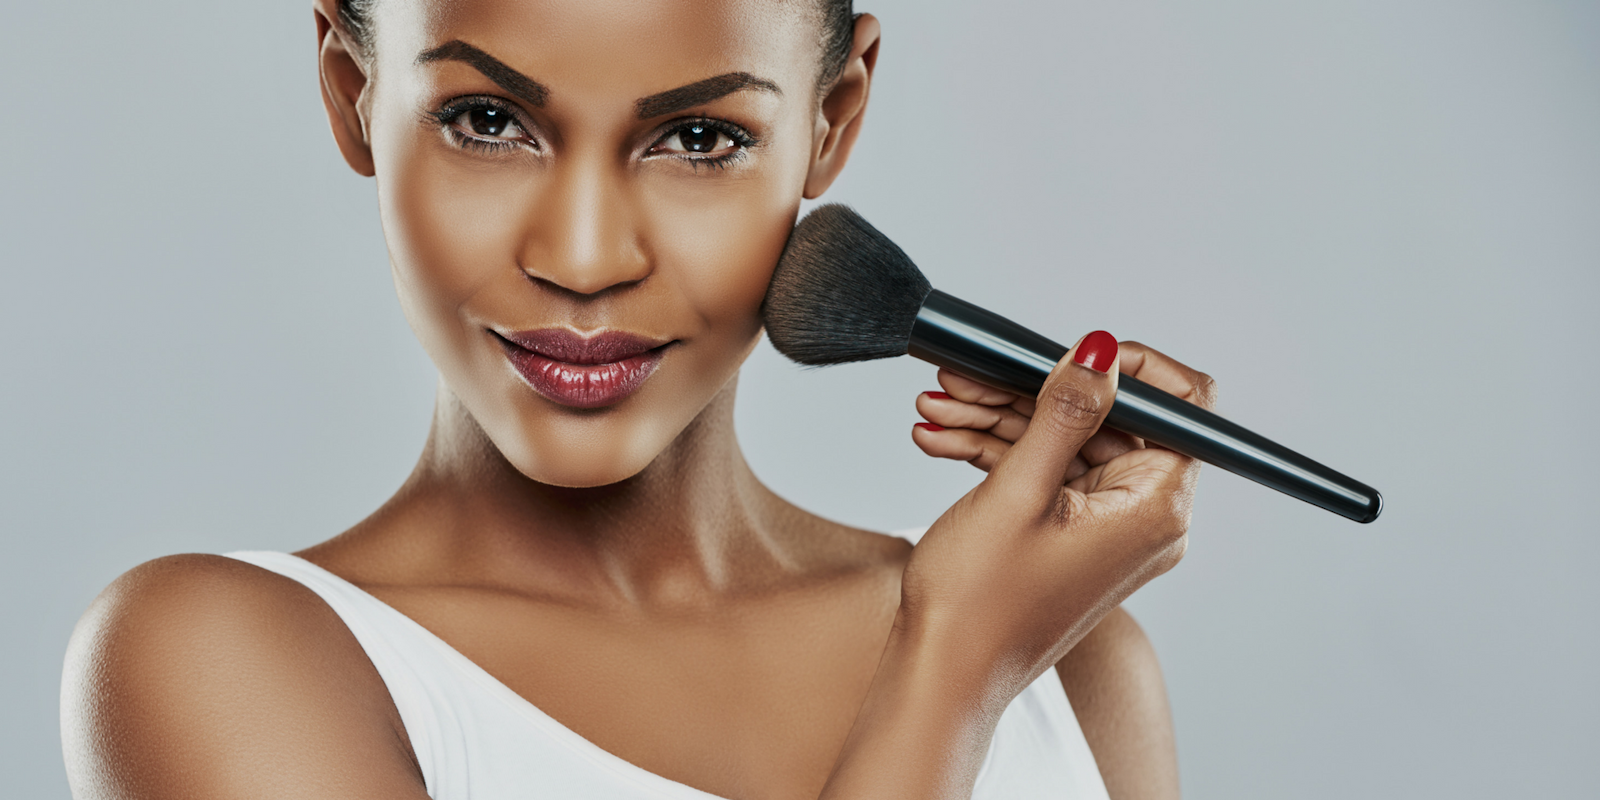 A Black woman putting on makeup